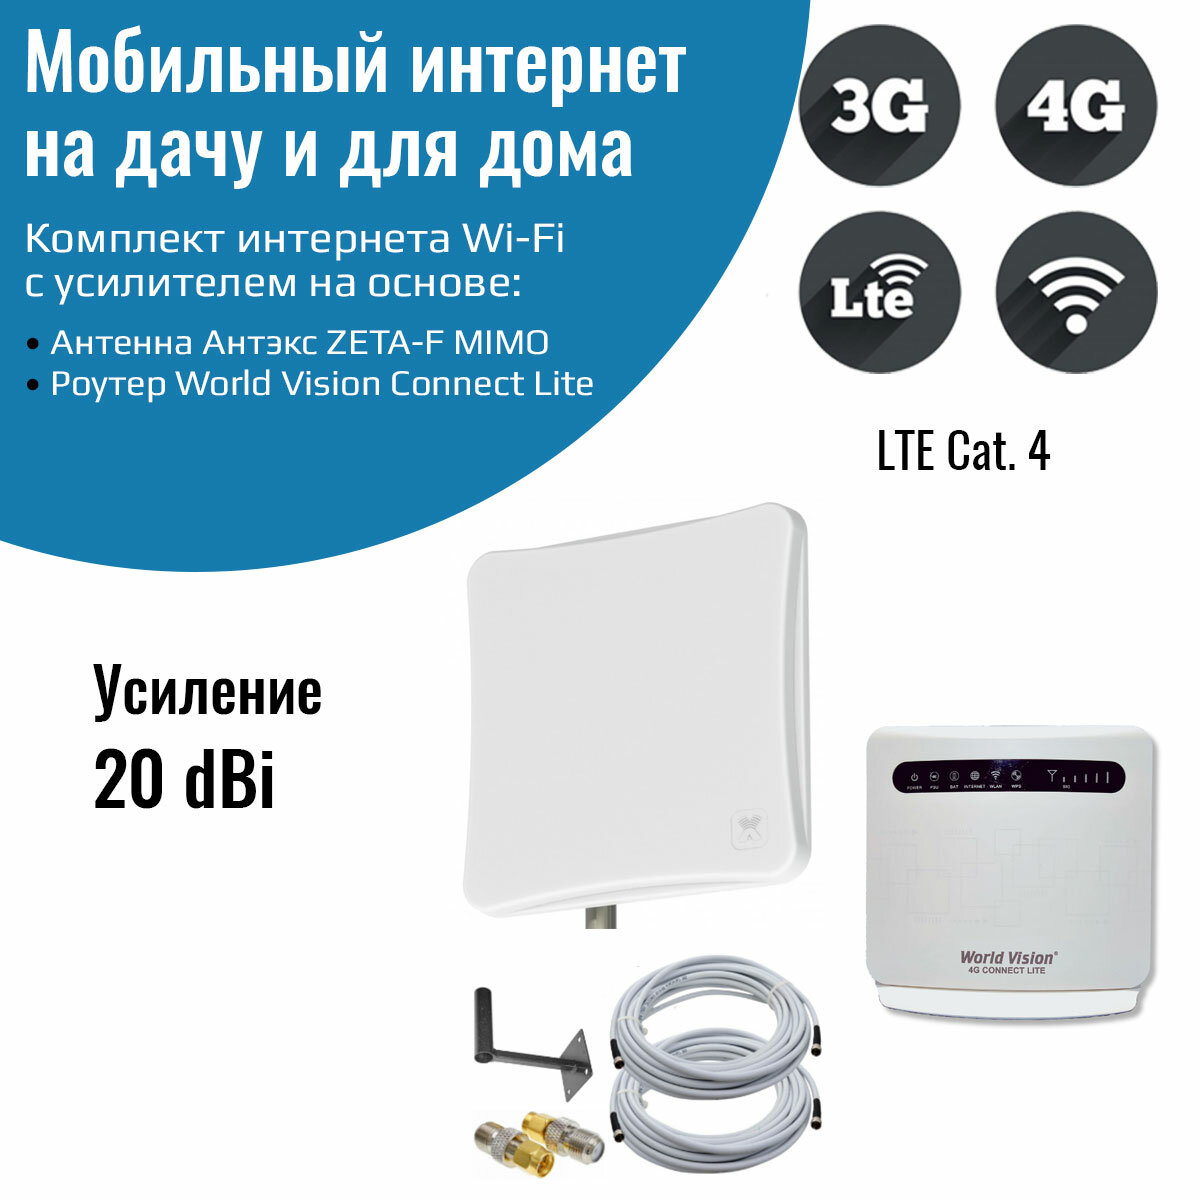 Комплект интернета WiFi для дачи и дома 3G/4G/LTE – Роутер Connect Lite с антенной ZETA-F MIMO 20 ДБ